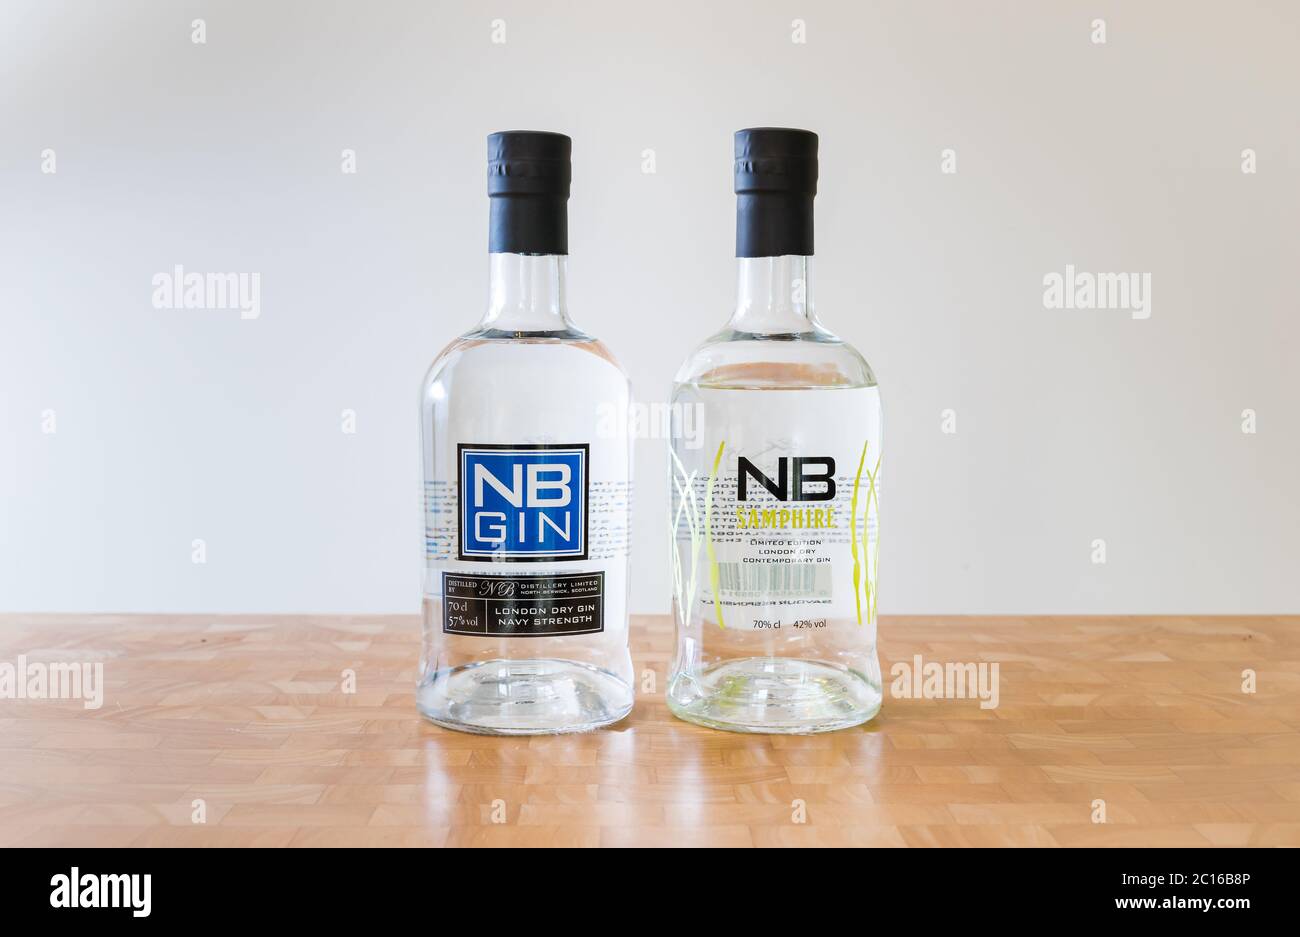 North Berwick or NB gin brand bottles: NB navy strength gin and NB samphire gin Stock Photo